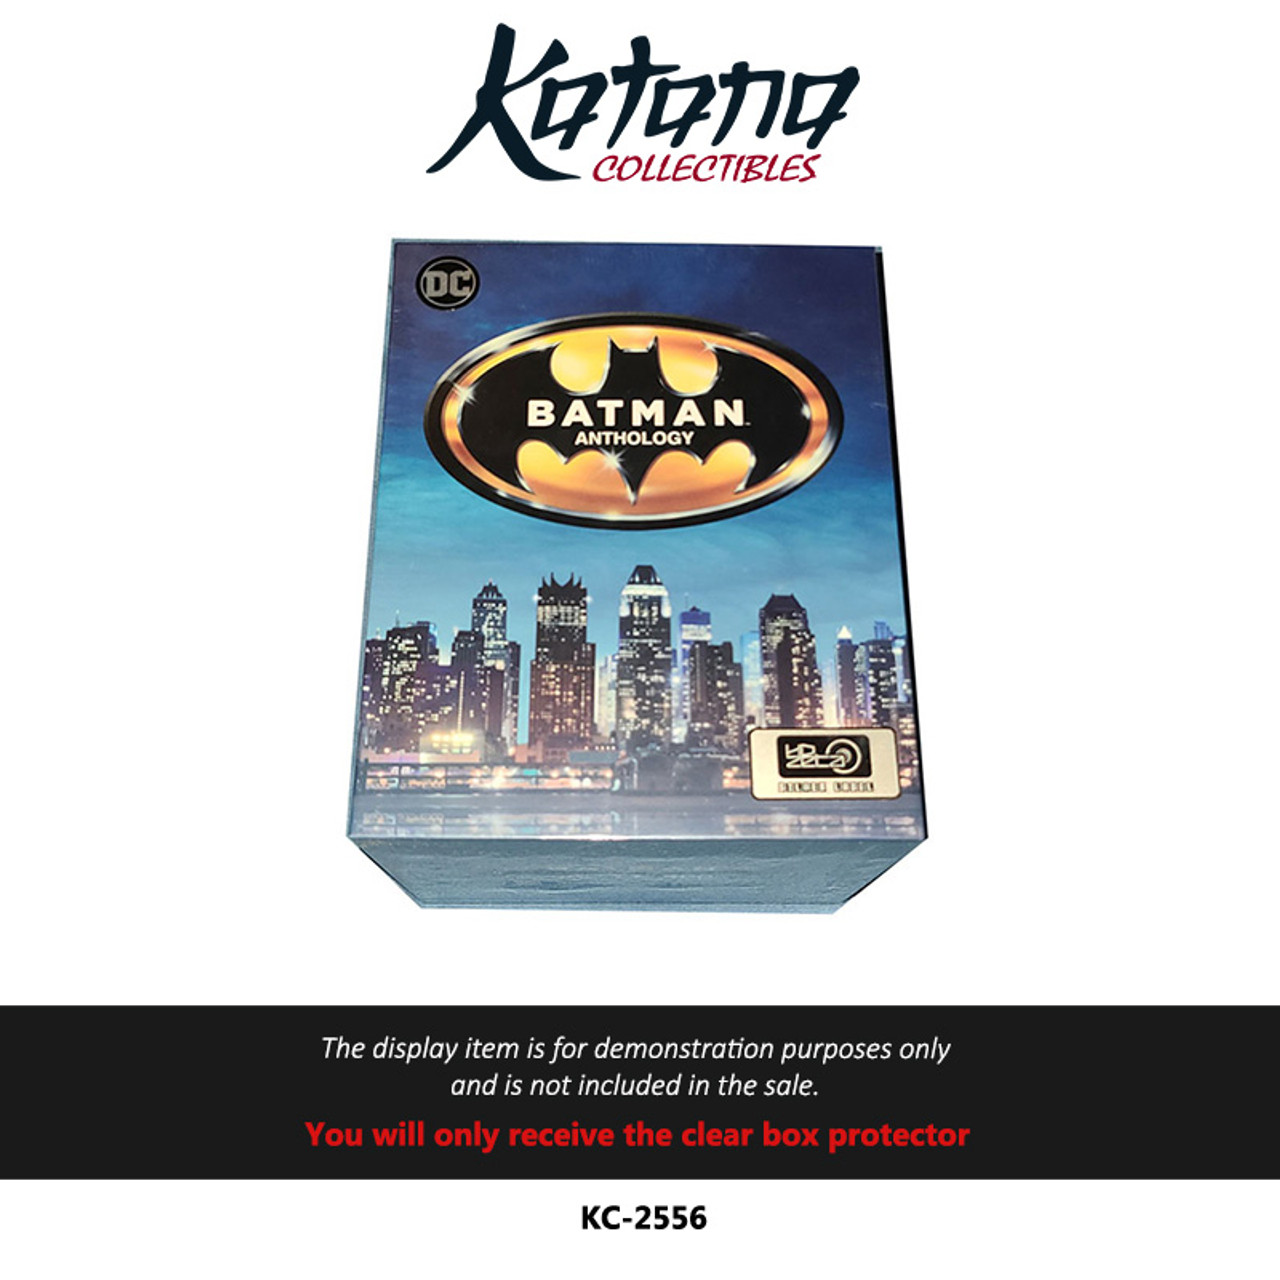 Katana Collectibles Protector For HDZETA Batman Anthology